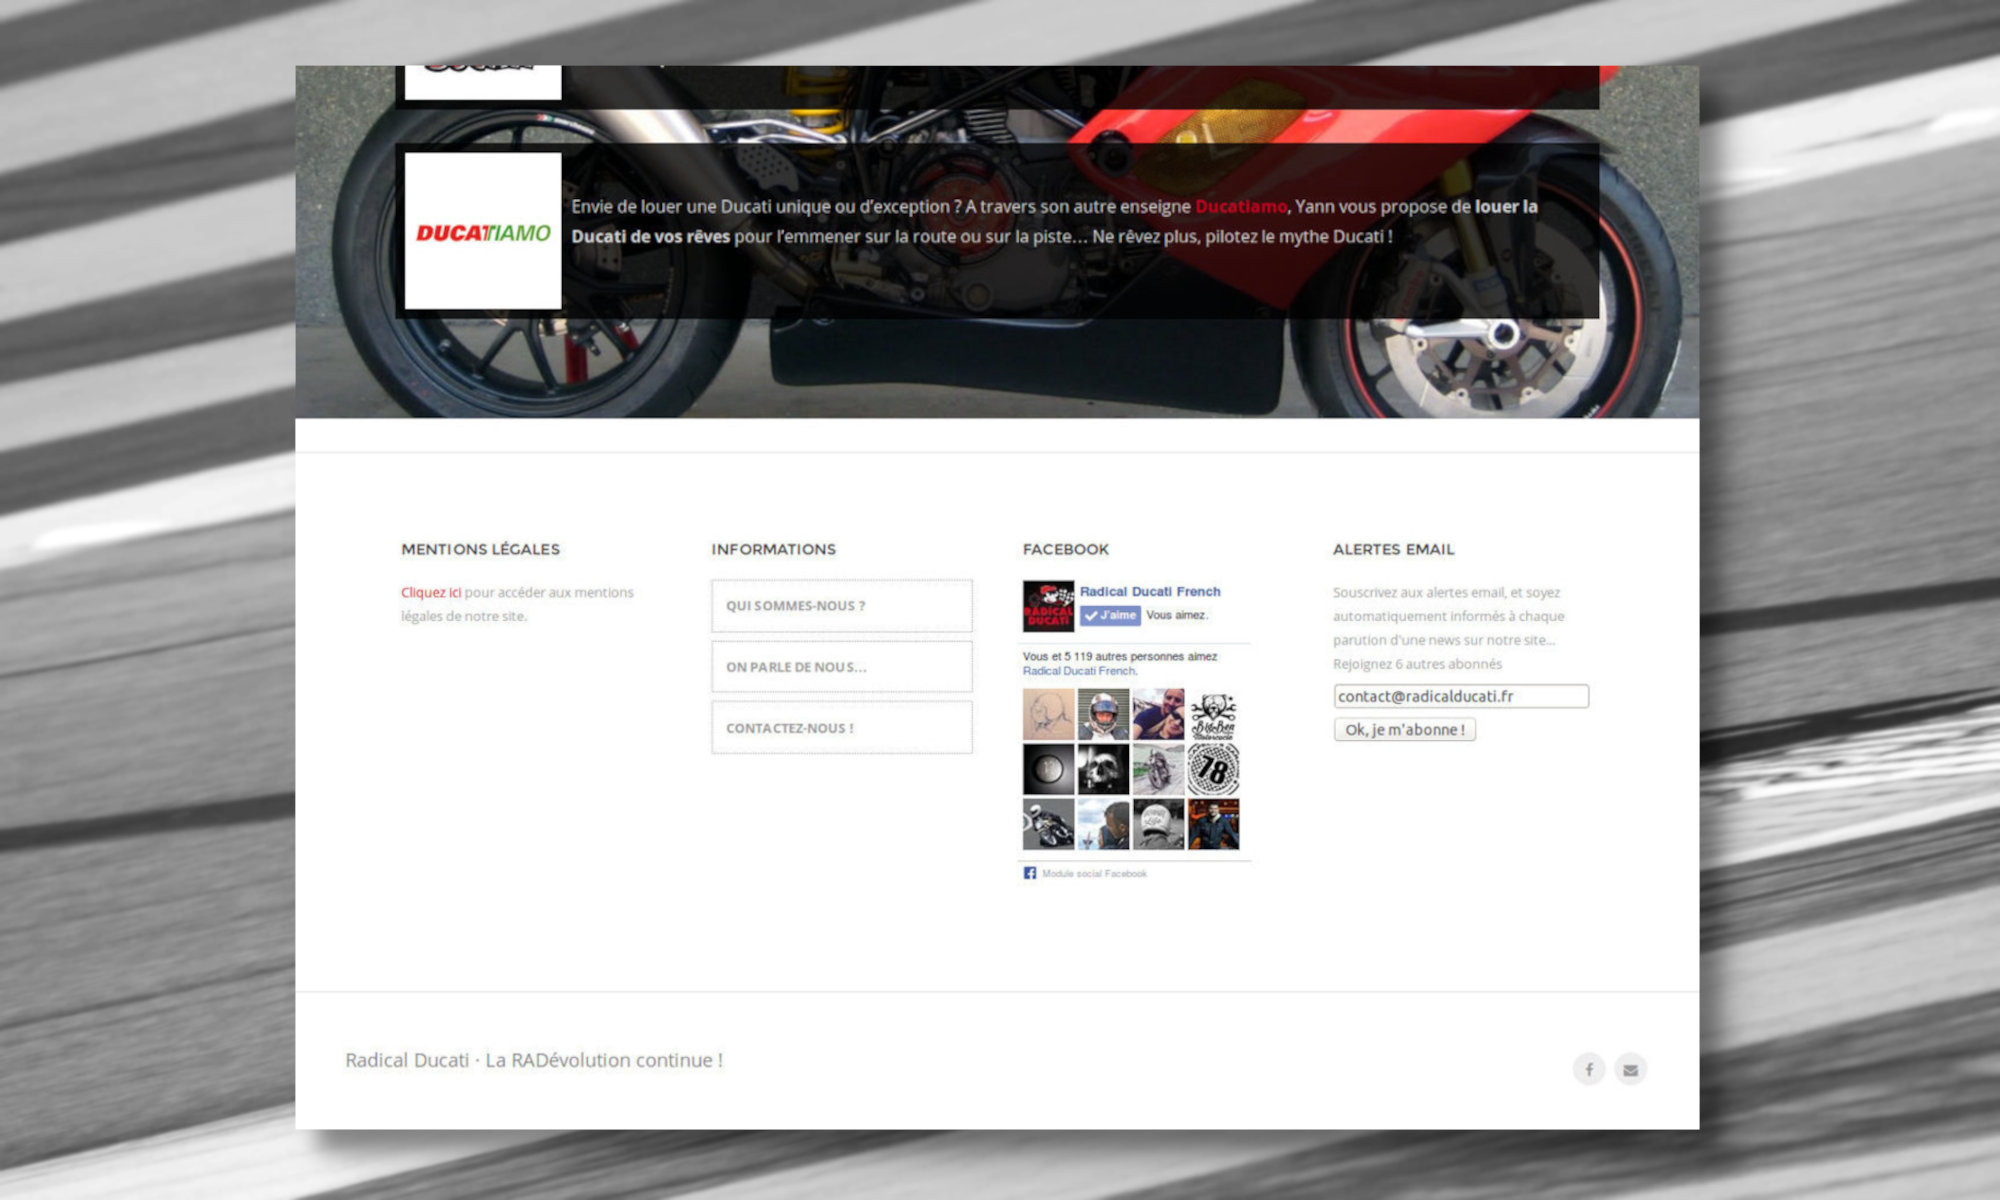 Le site internet de "Radical Ducati".